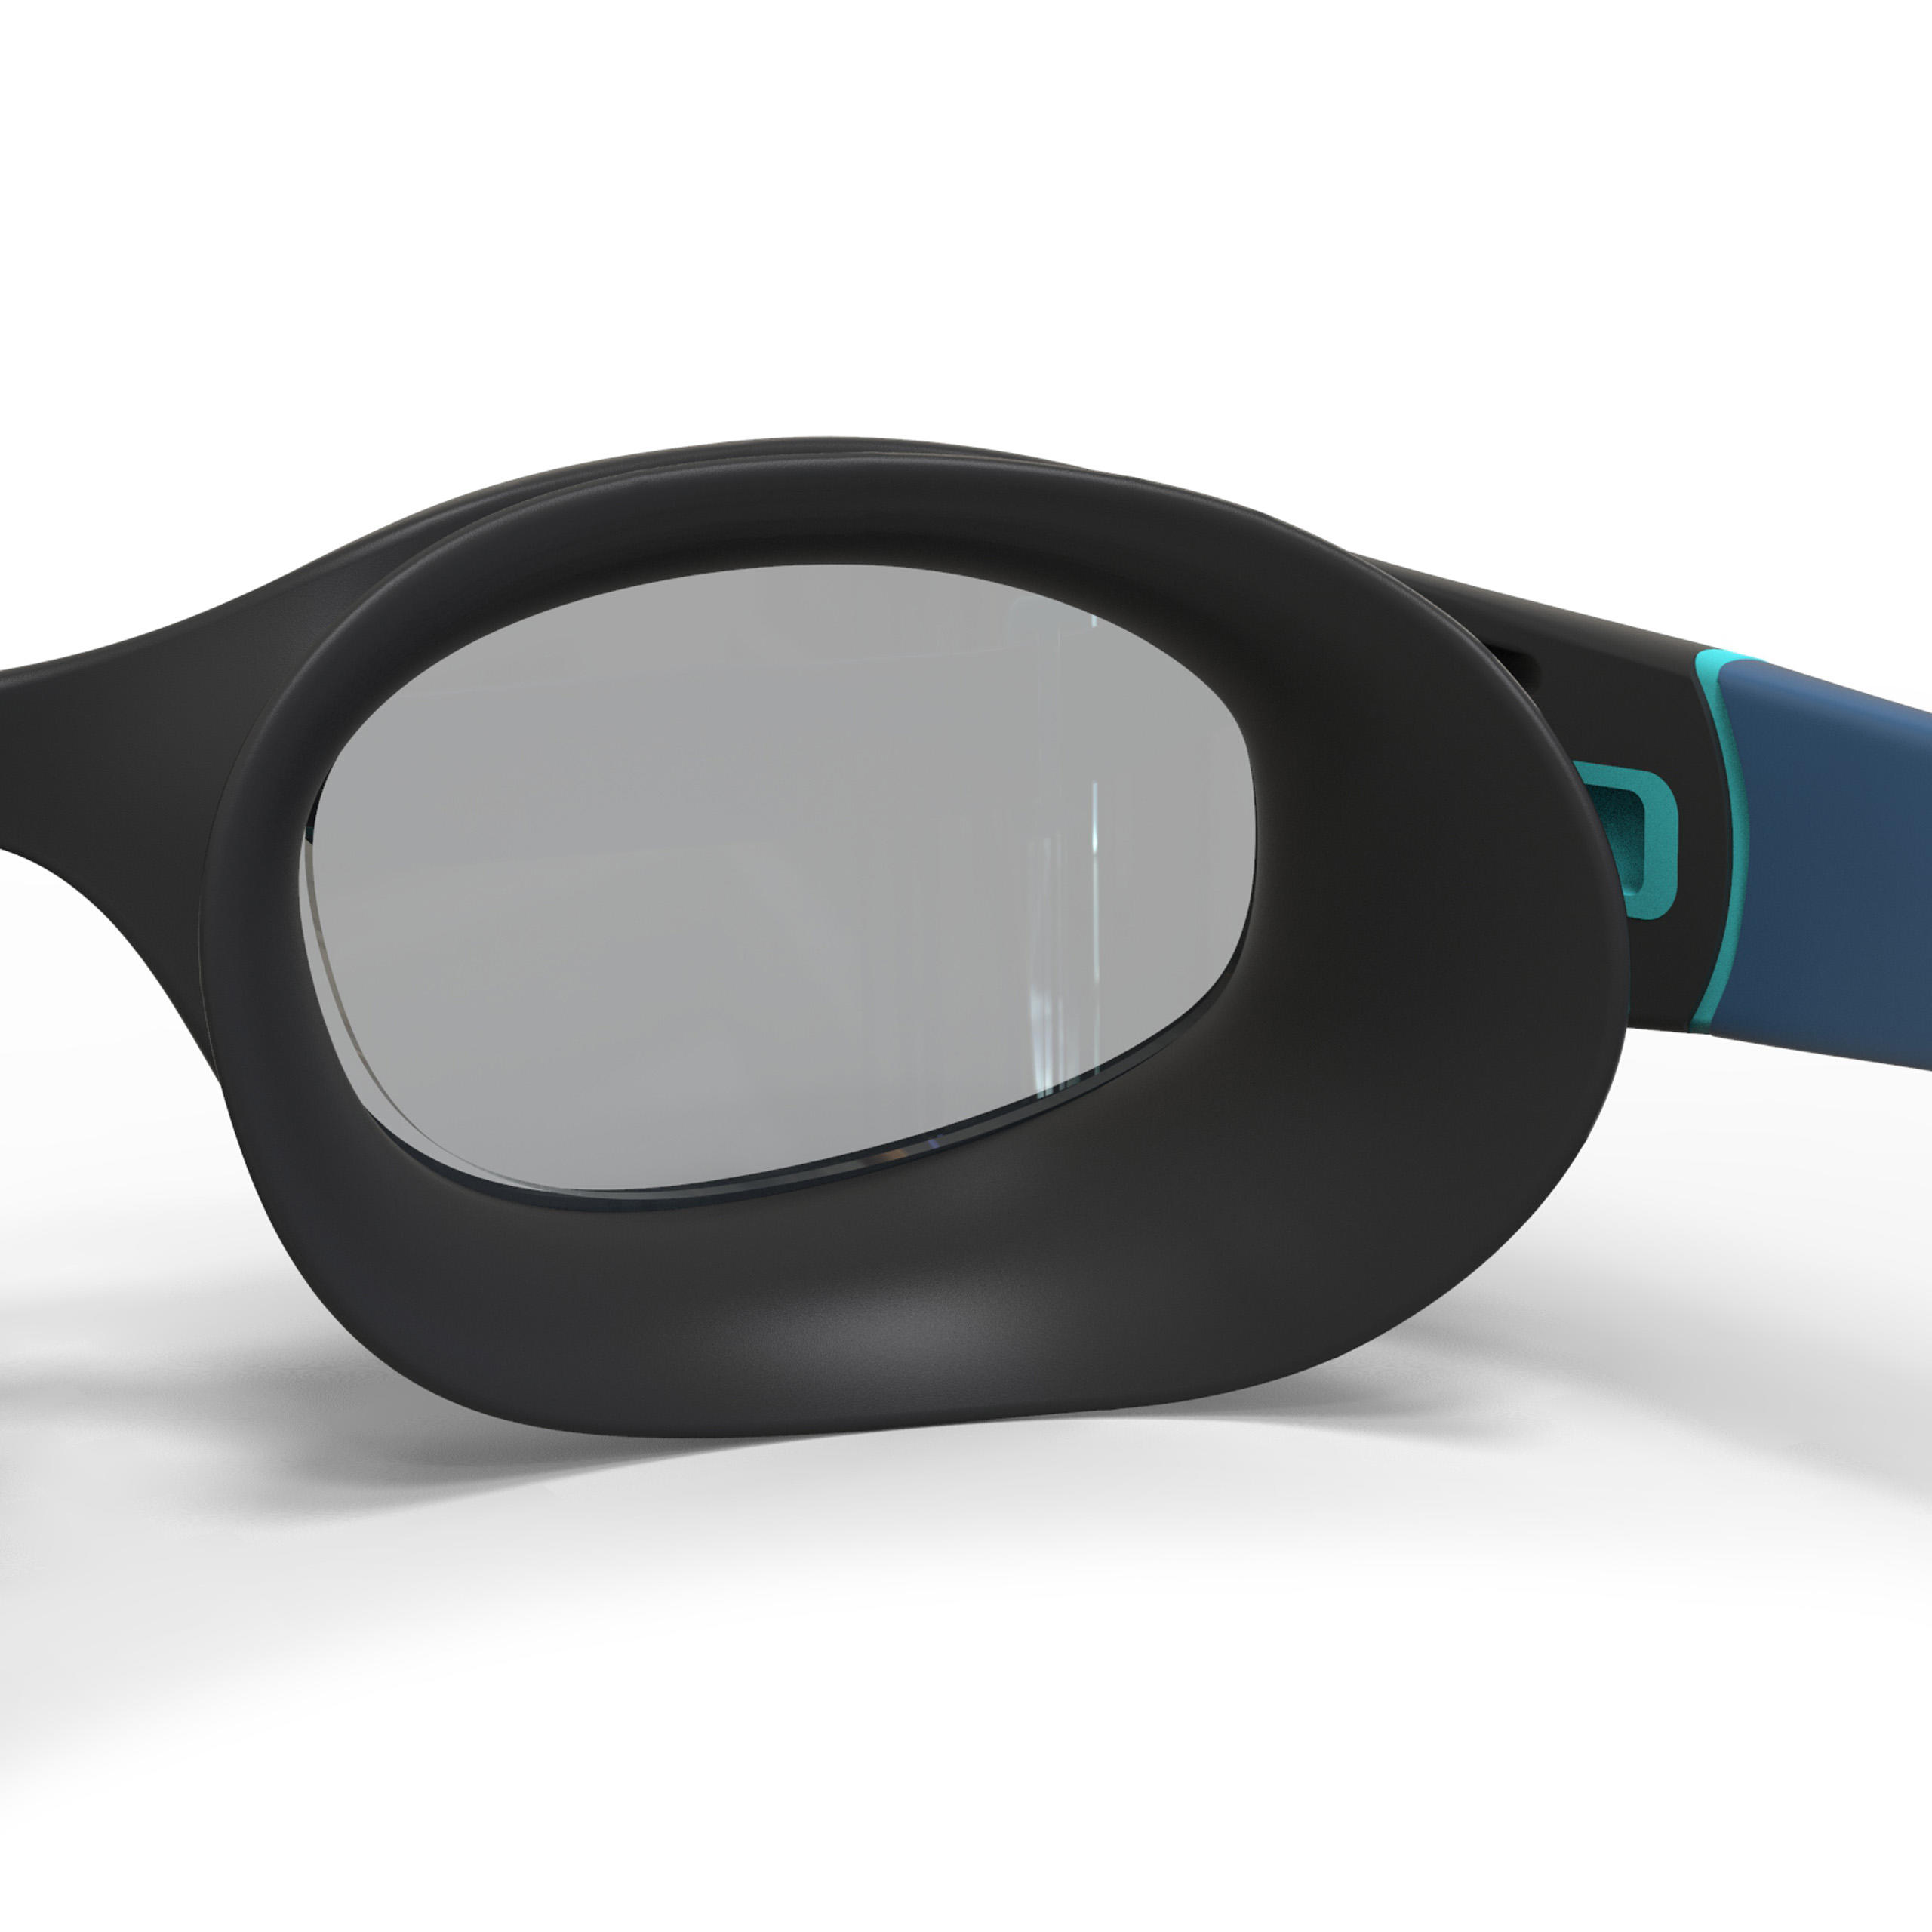 Swimming Goggles Smoked Lenses Size L - Soft Black - NABAIJI